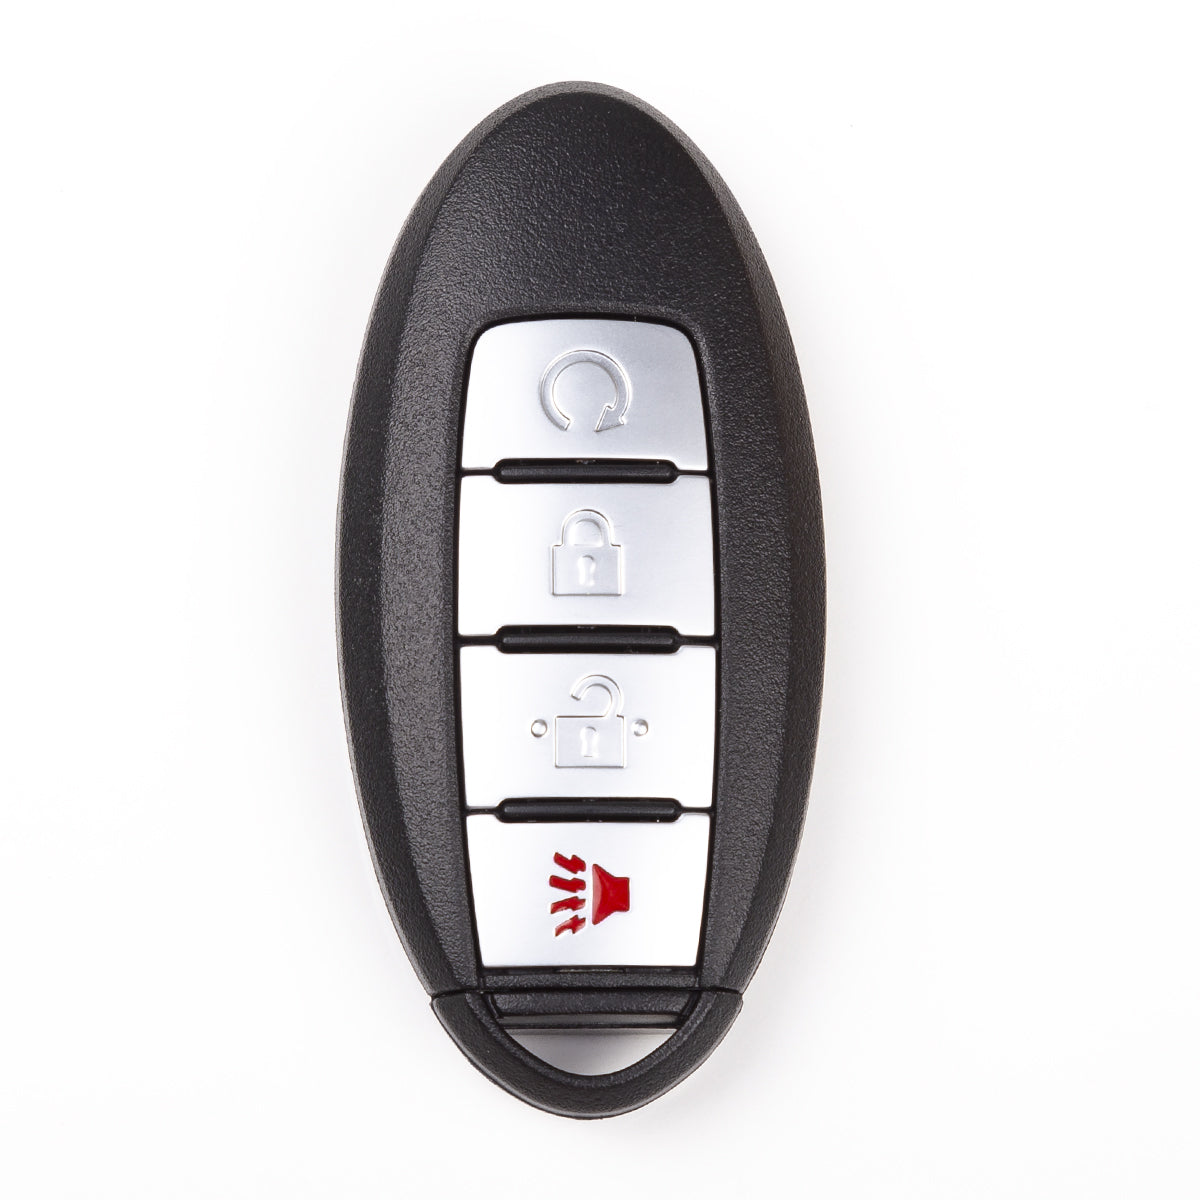 2016 Nissan Titan Smart Key w/ Remote Start 4 Buttons Fob FCC# KR5S180144014 - Aftermarket